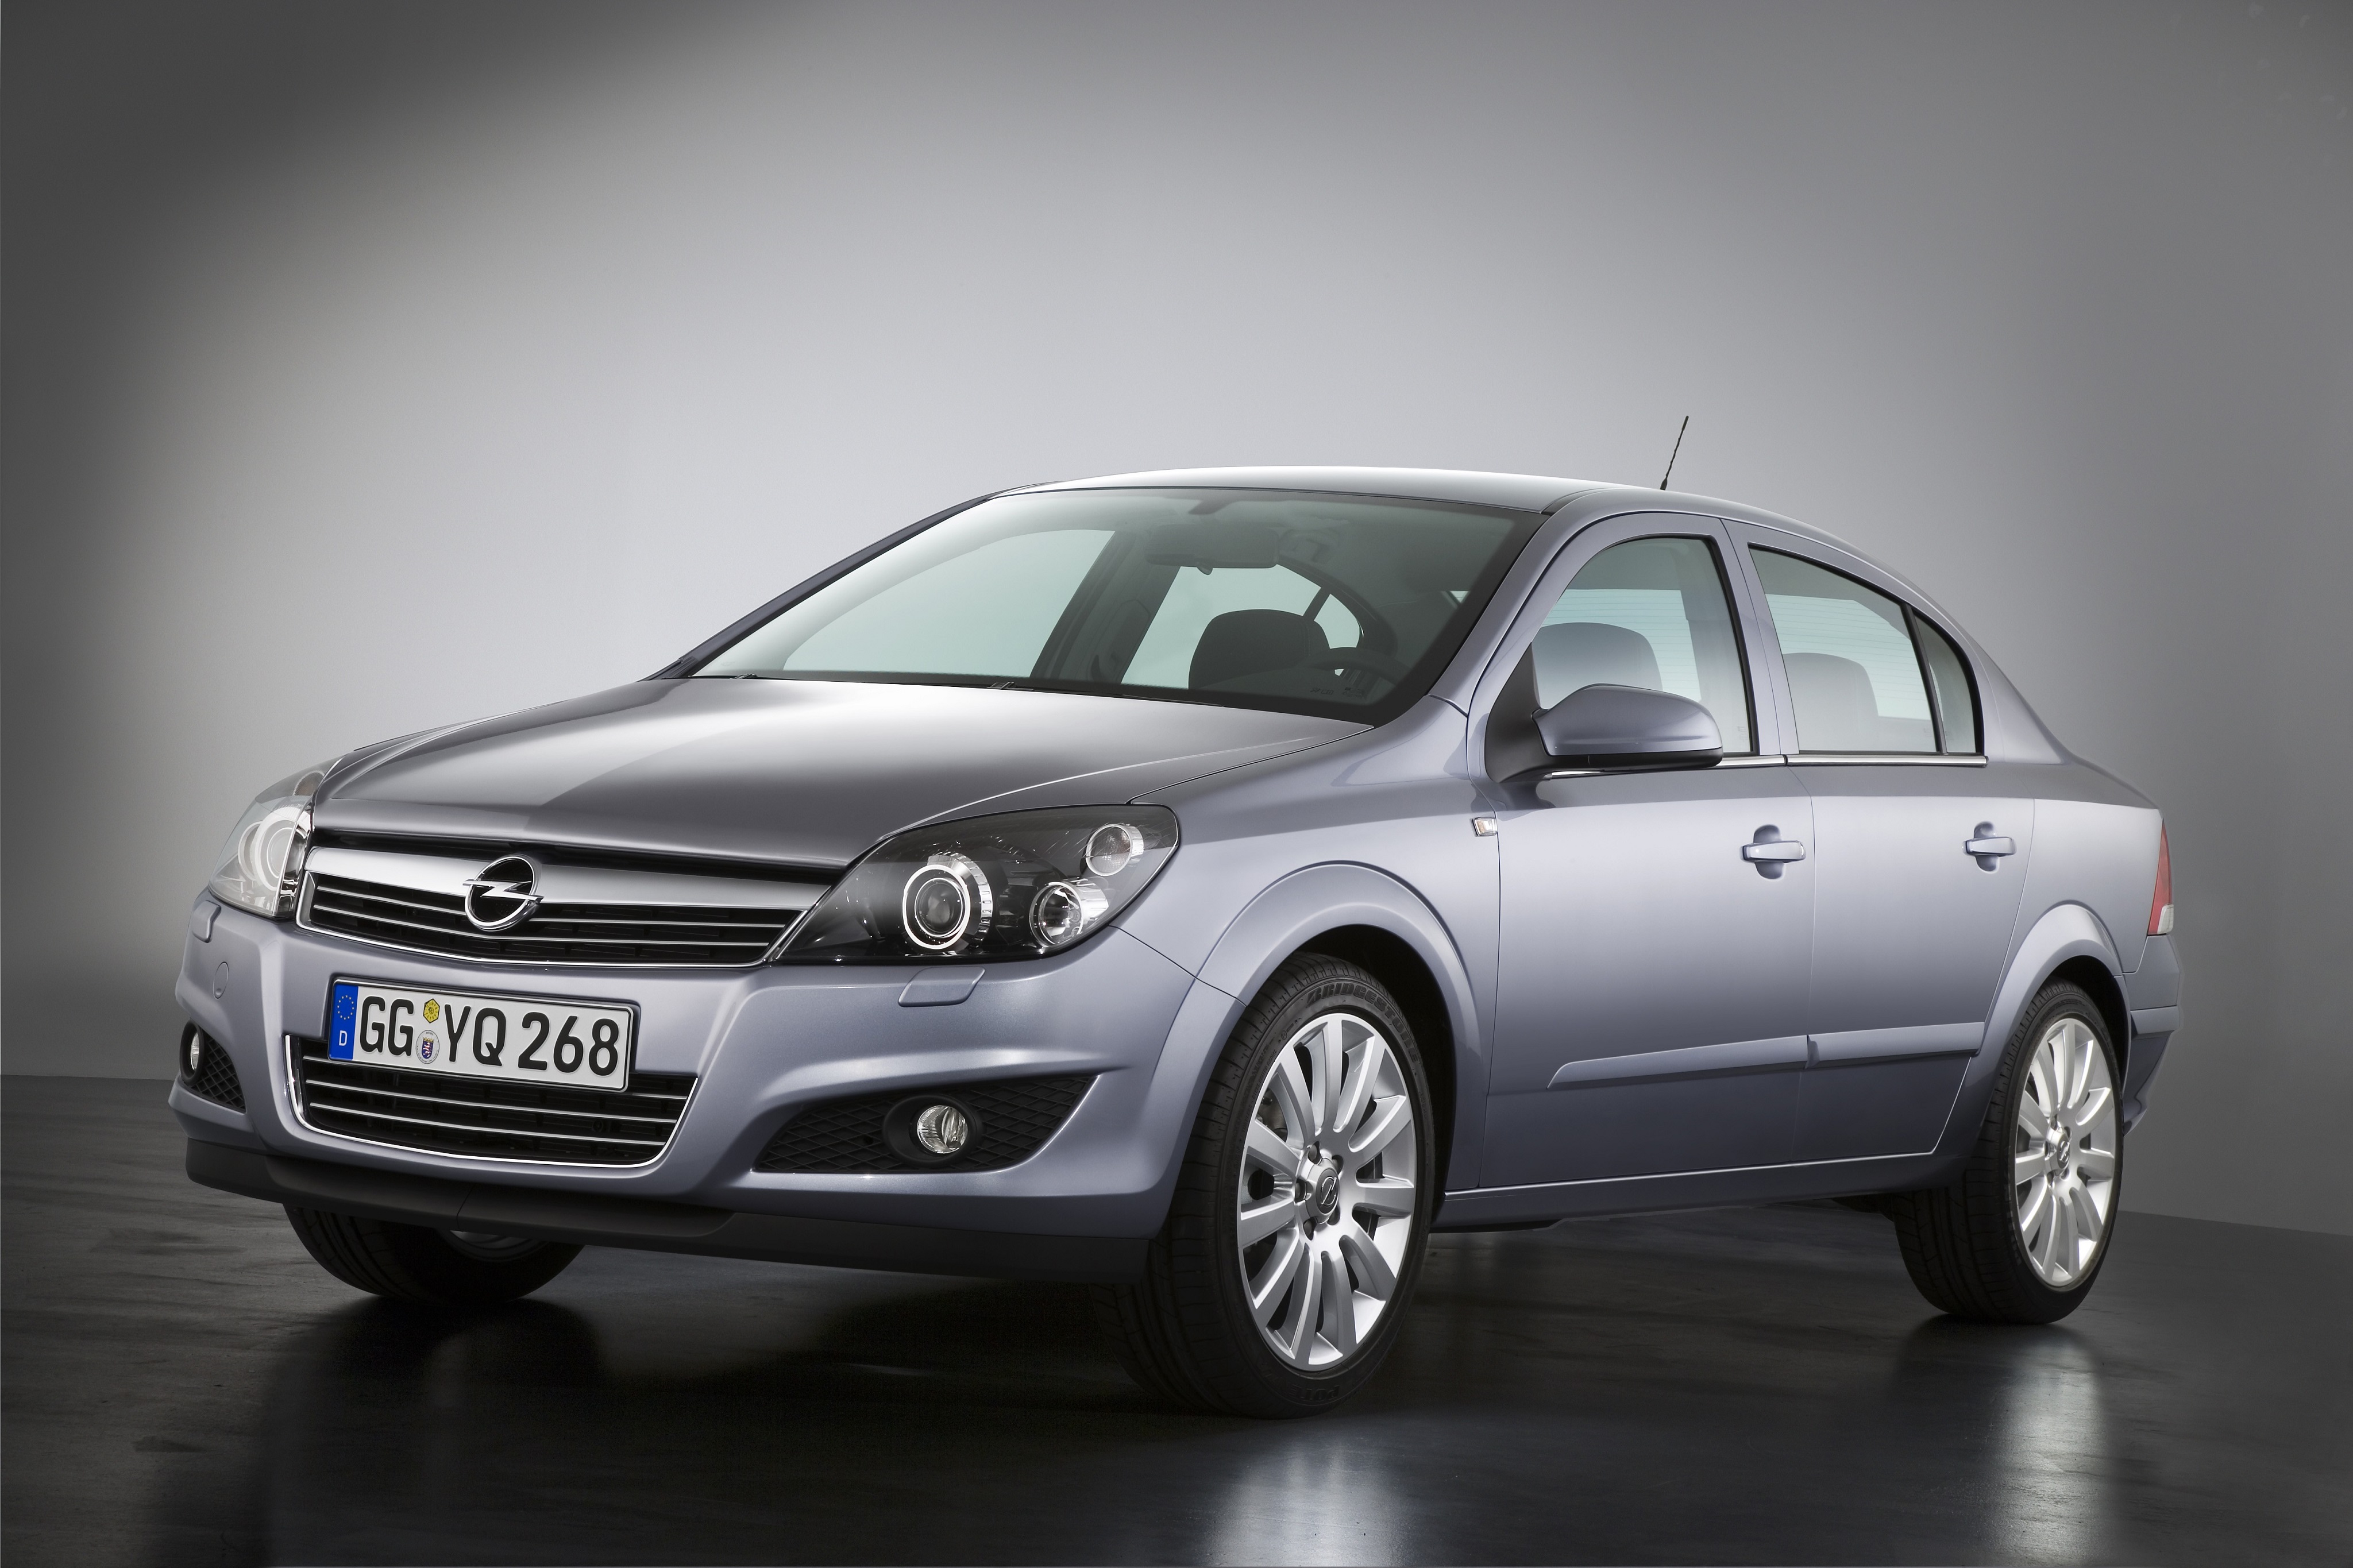 Б у авто опели. Opel Astra h 2007 седан. Opel Astra h 2007 1.8. Opel Astra 2007 седан. Opel Astra h 1.6 седан 2011.